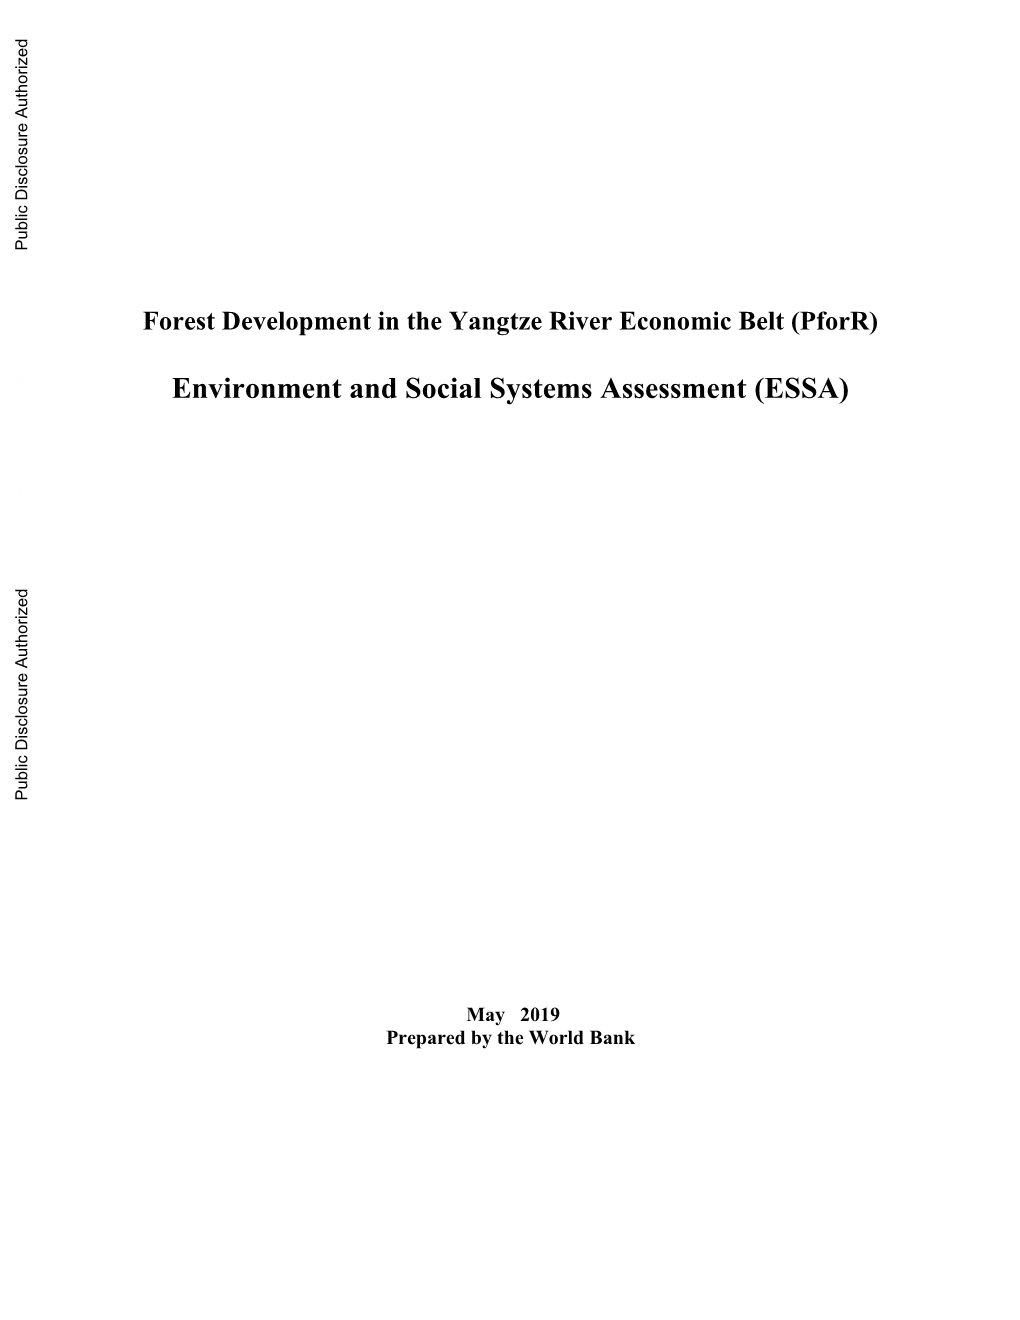 Forest Development in the Yangtze River Economic Belt (Pforr)